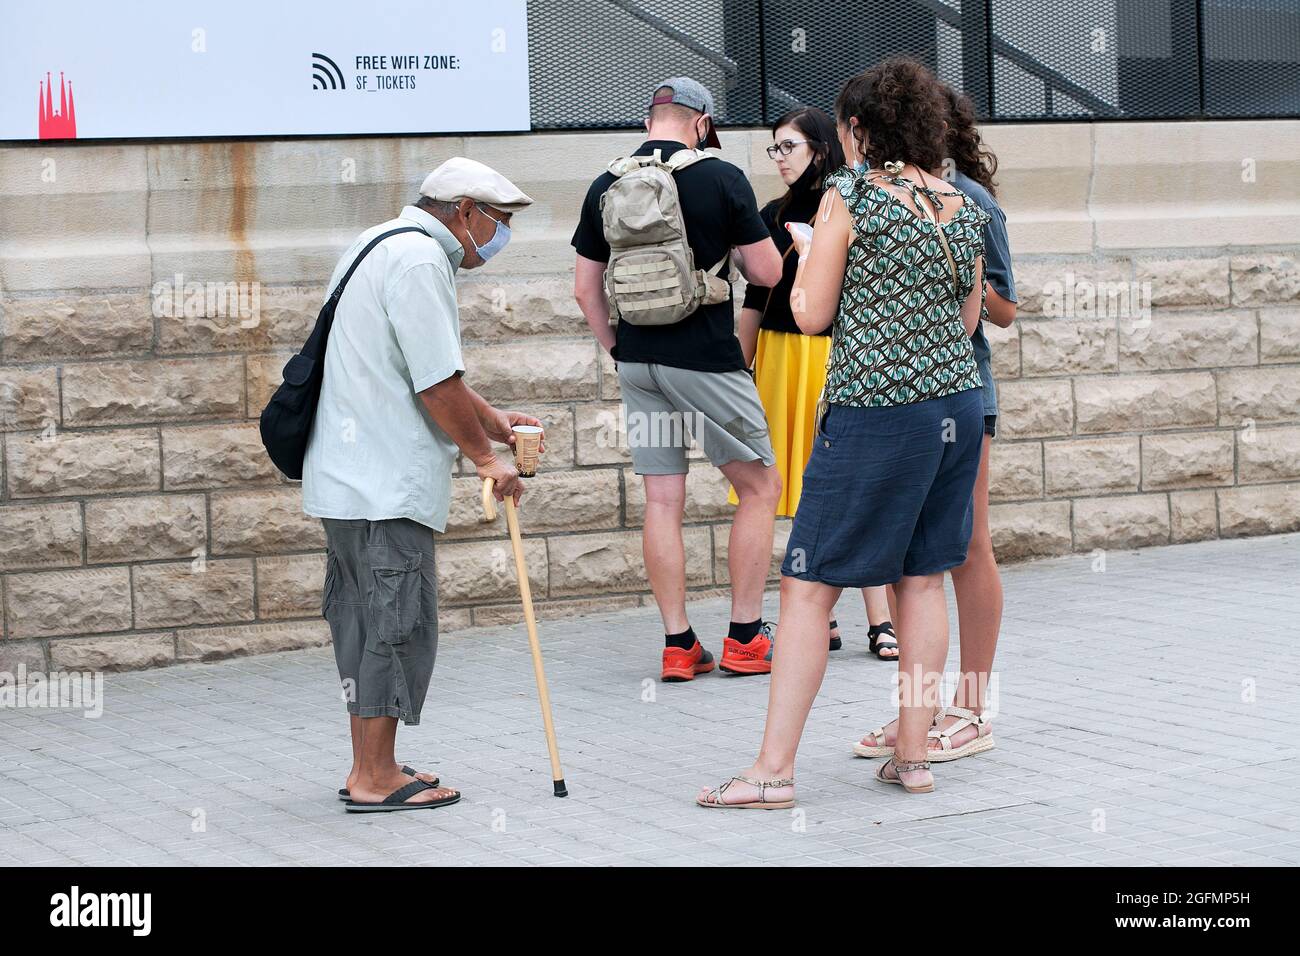 Romanian man begging from tourists, Sagrada Familia, Barcelona, Spain. Stock Photo